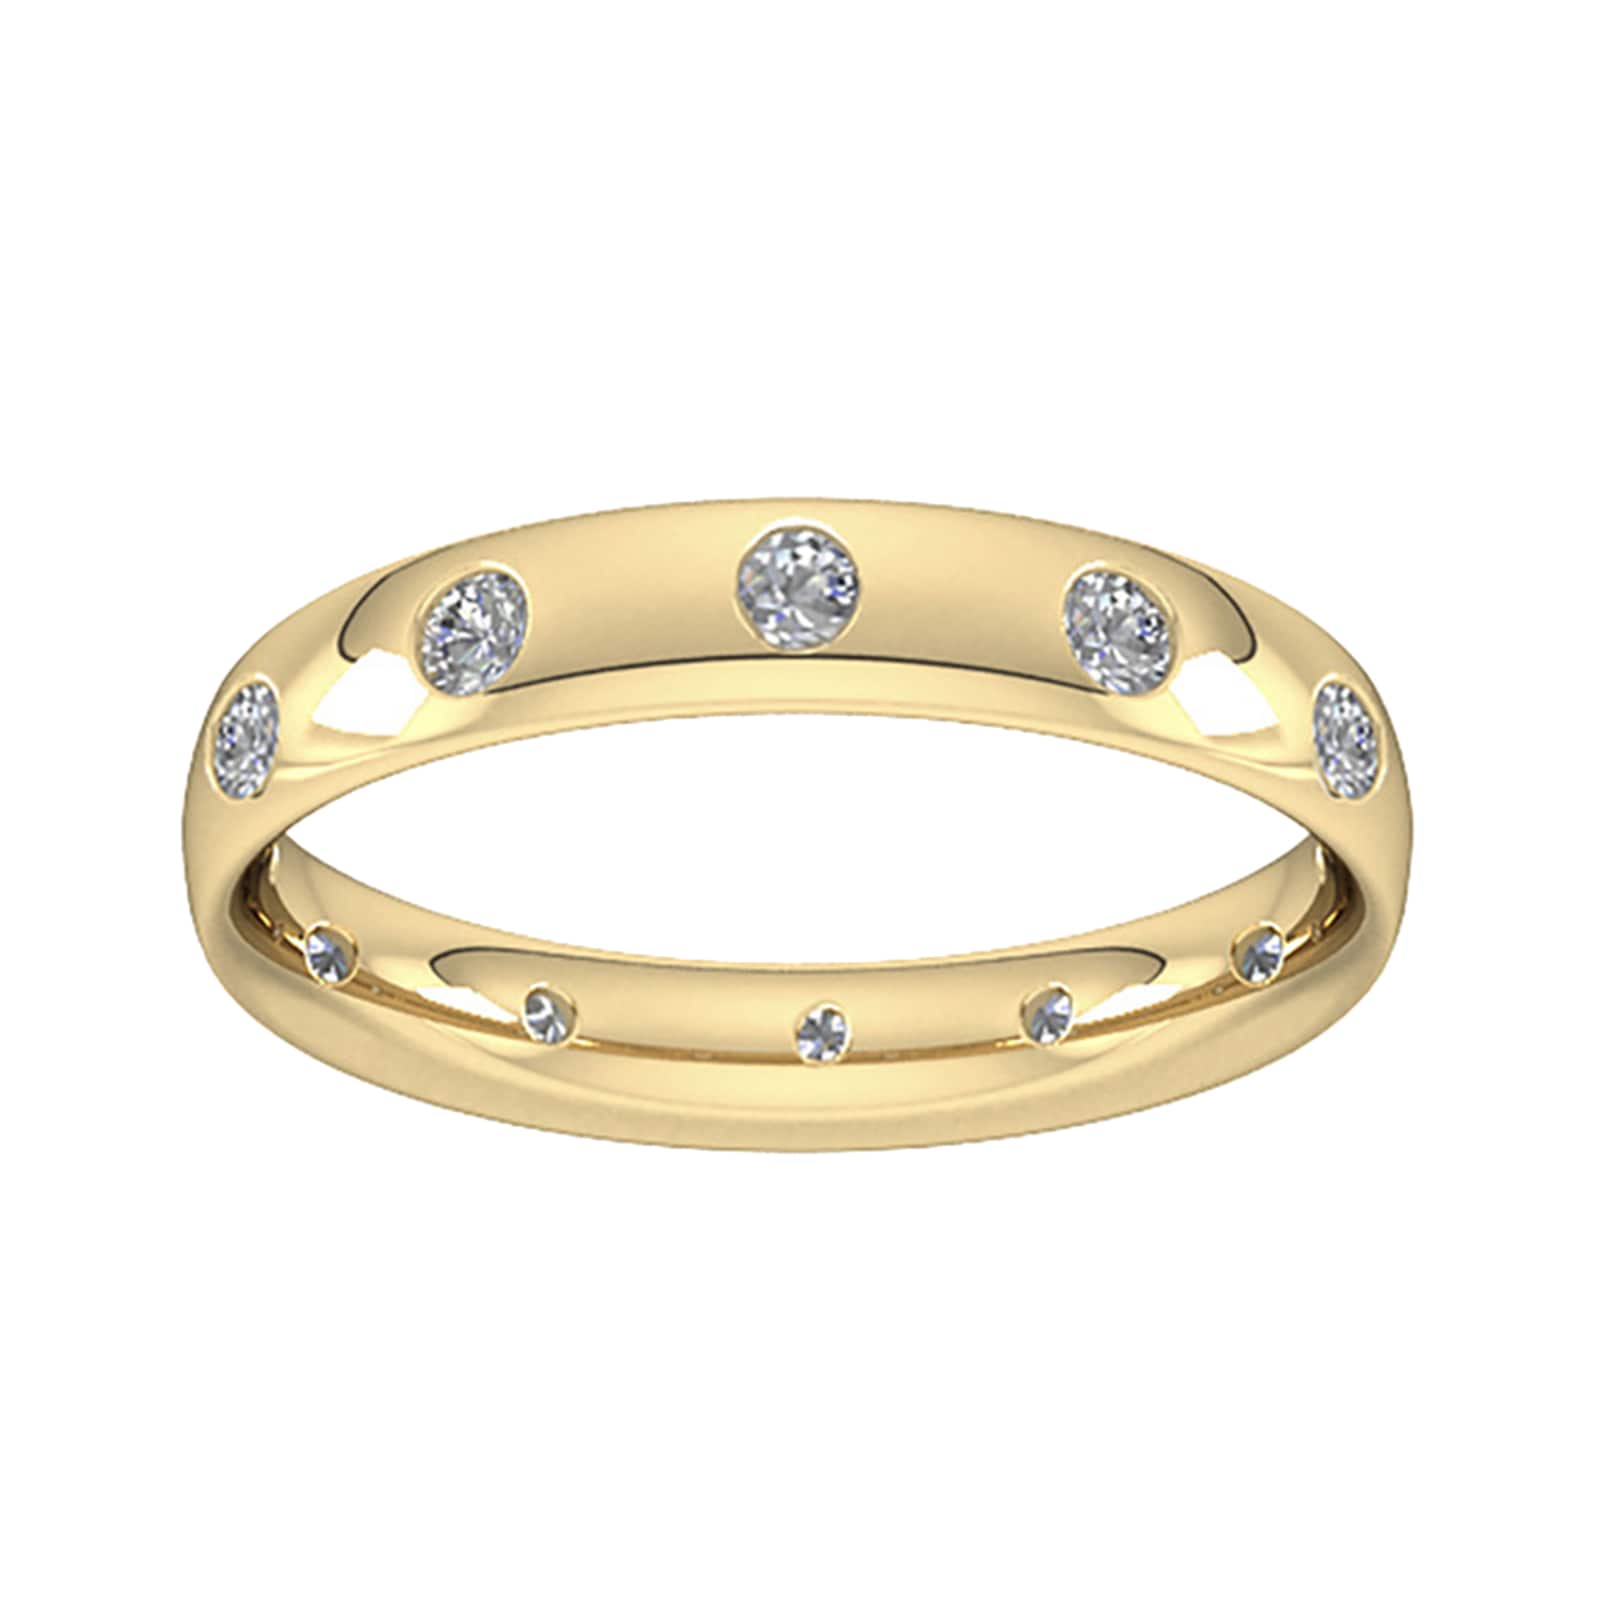 3mm 0.33 Carat Total Weight Twelve Stone Brilliant Cut Rub Over Diamond Set Wedding Ring In 9 Carat Yellow Gold - Ring Size J